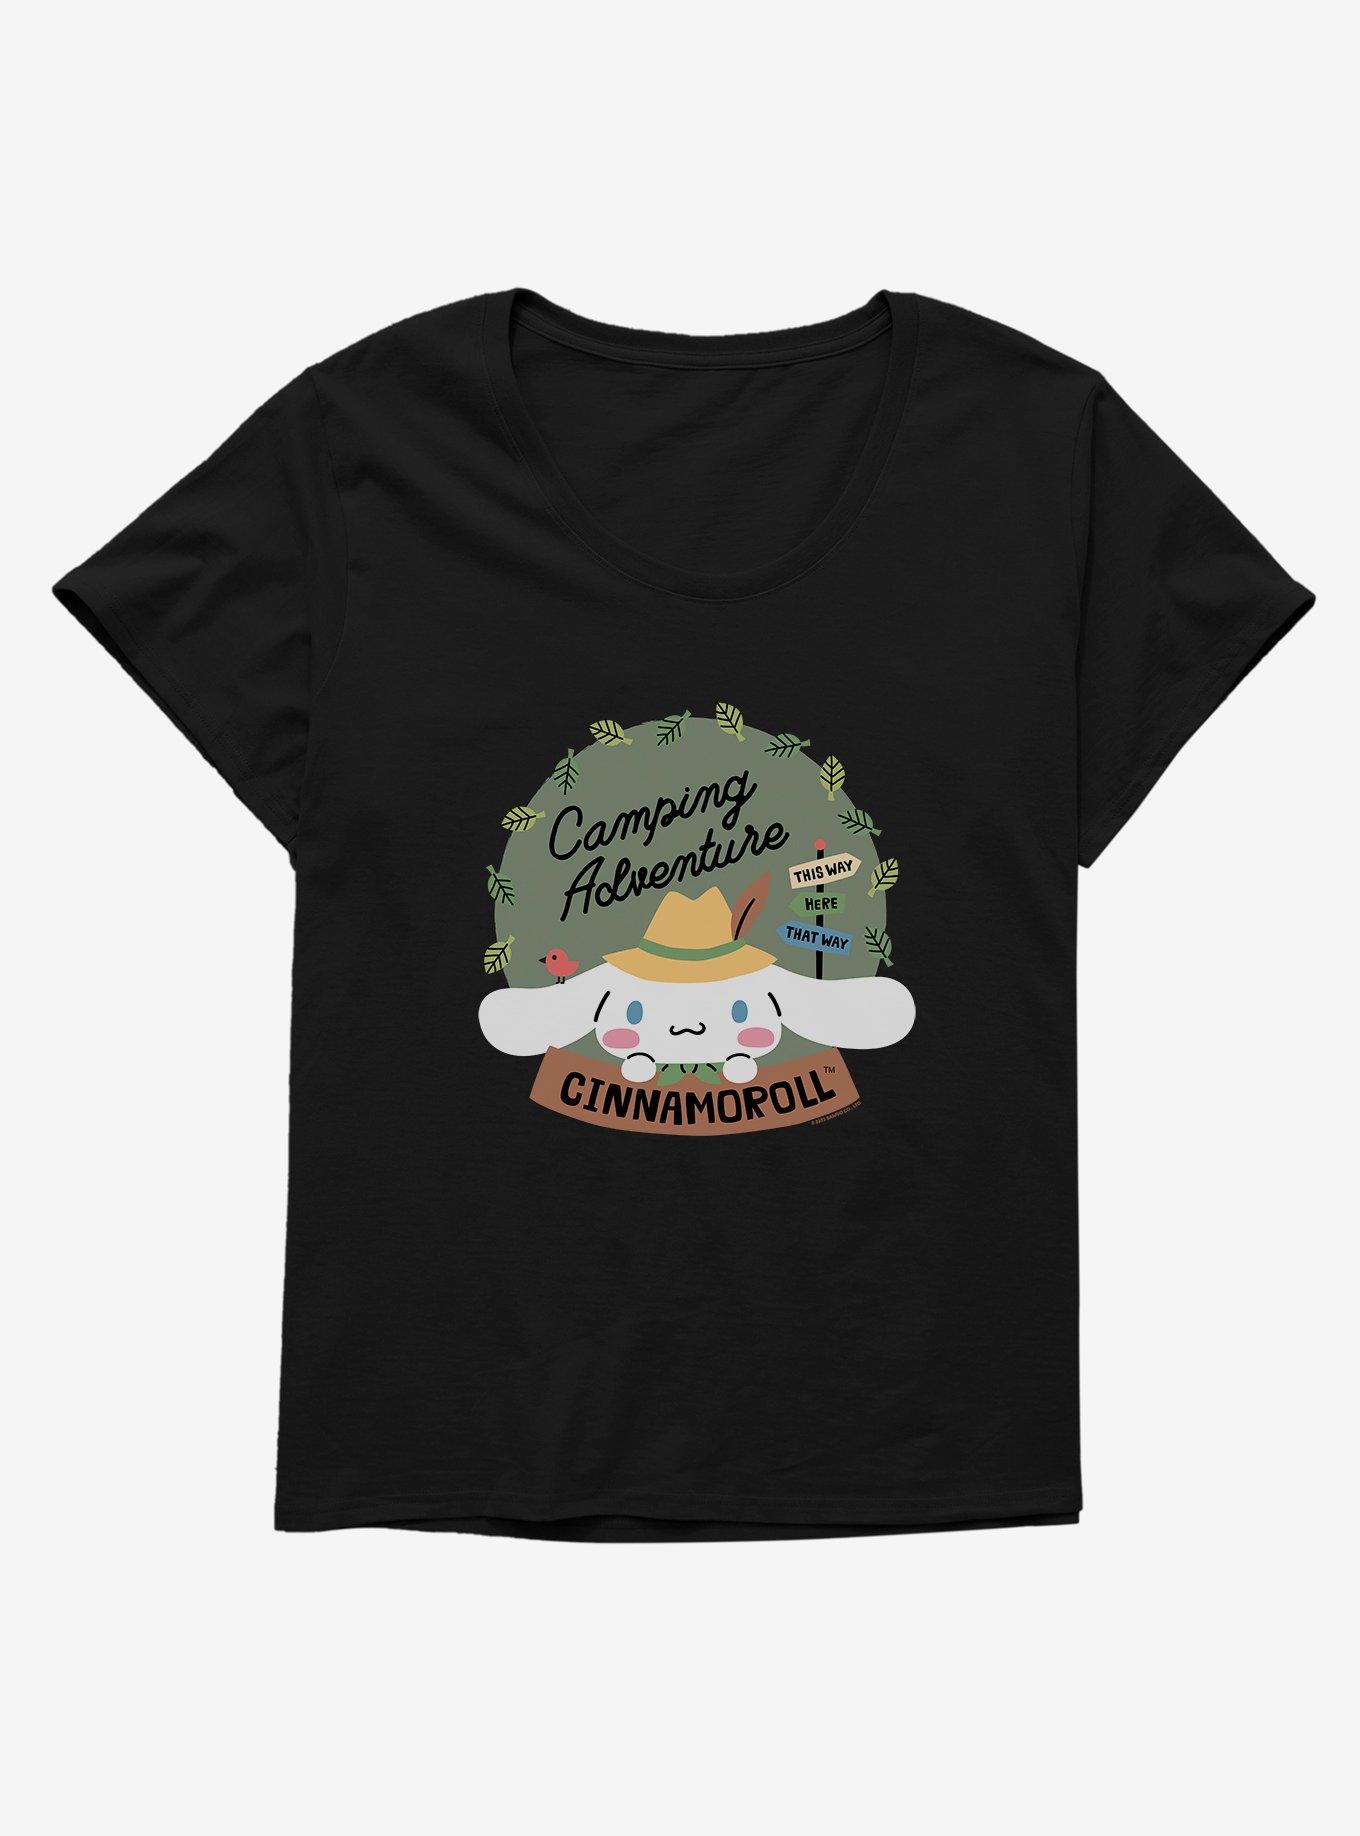 Cinnamoroll Camping Adventure Waysign Girls T-Shirt Plus